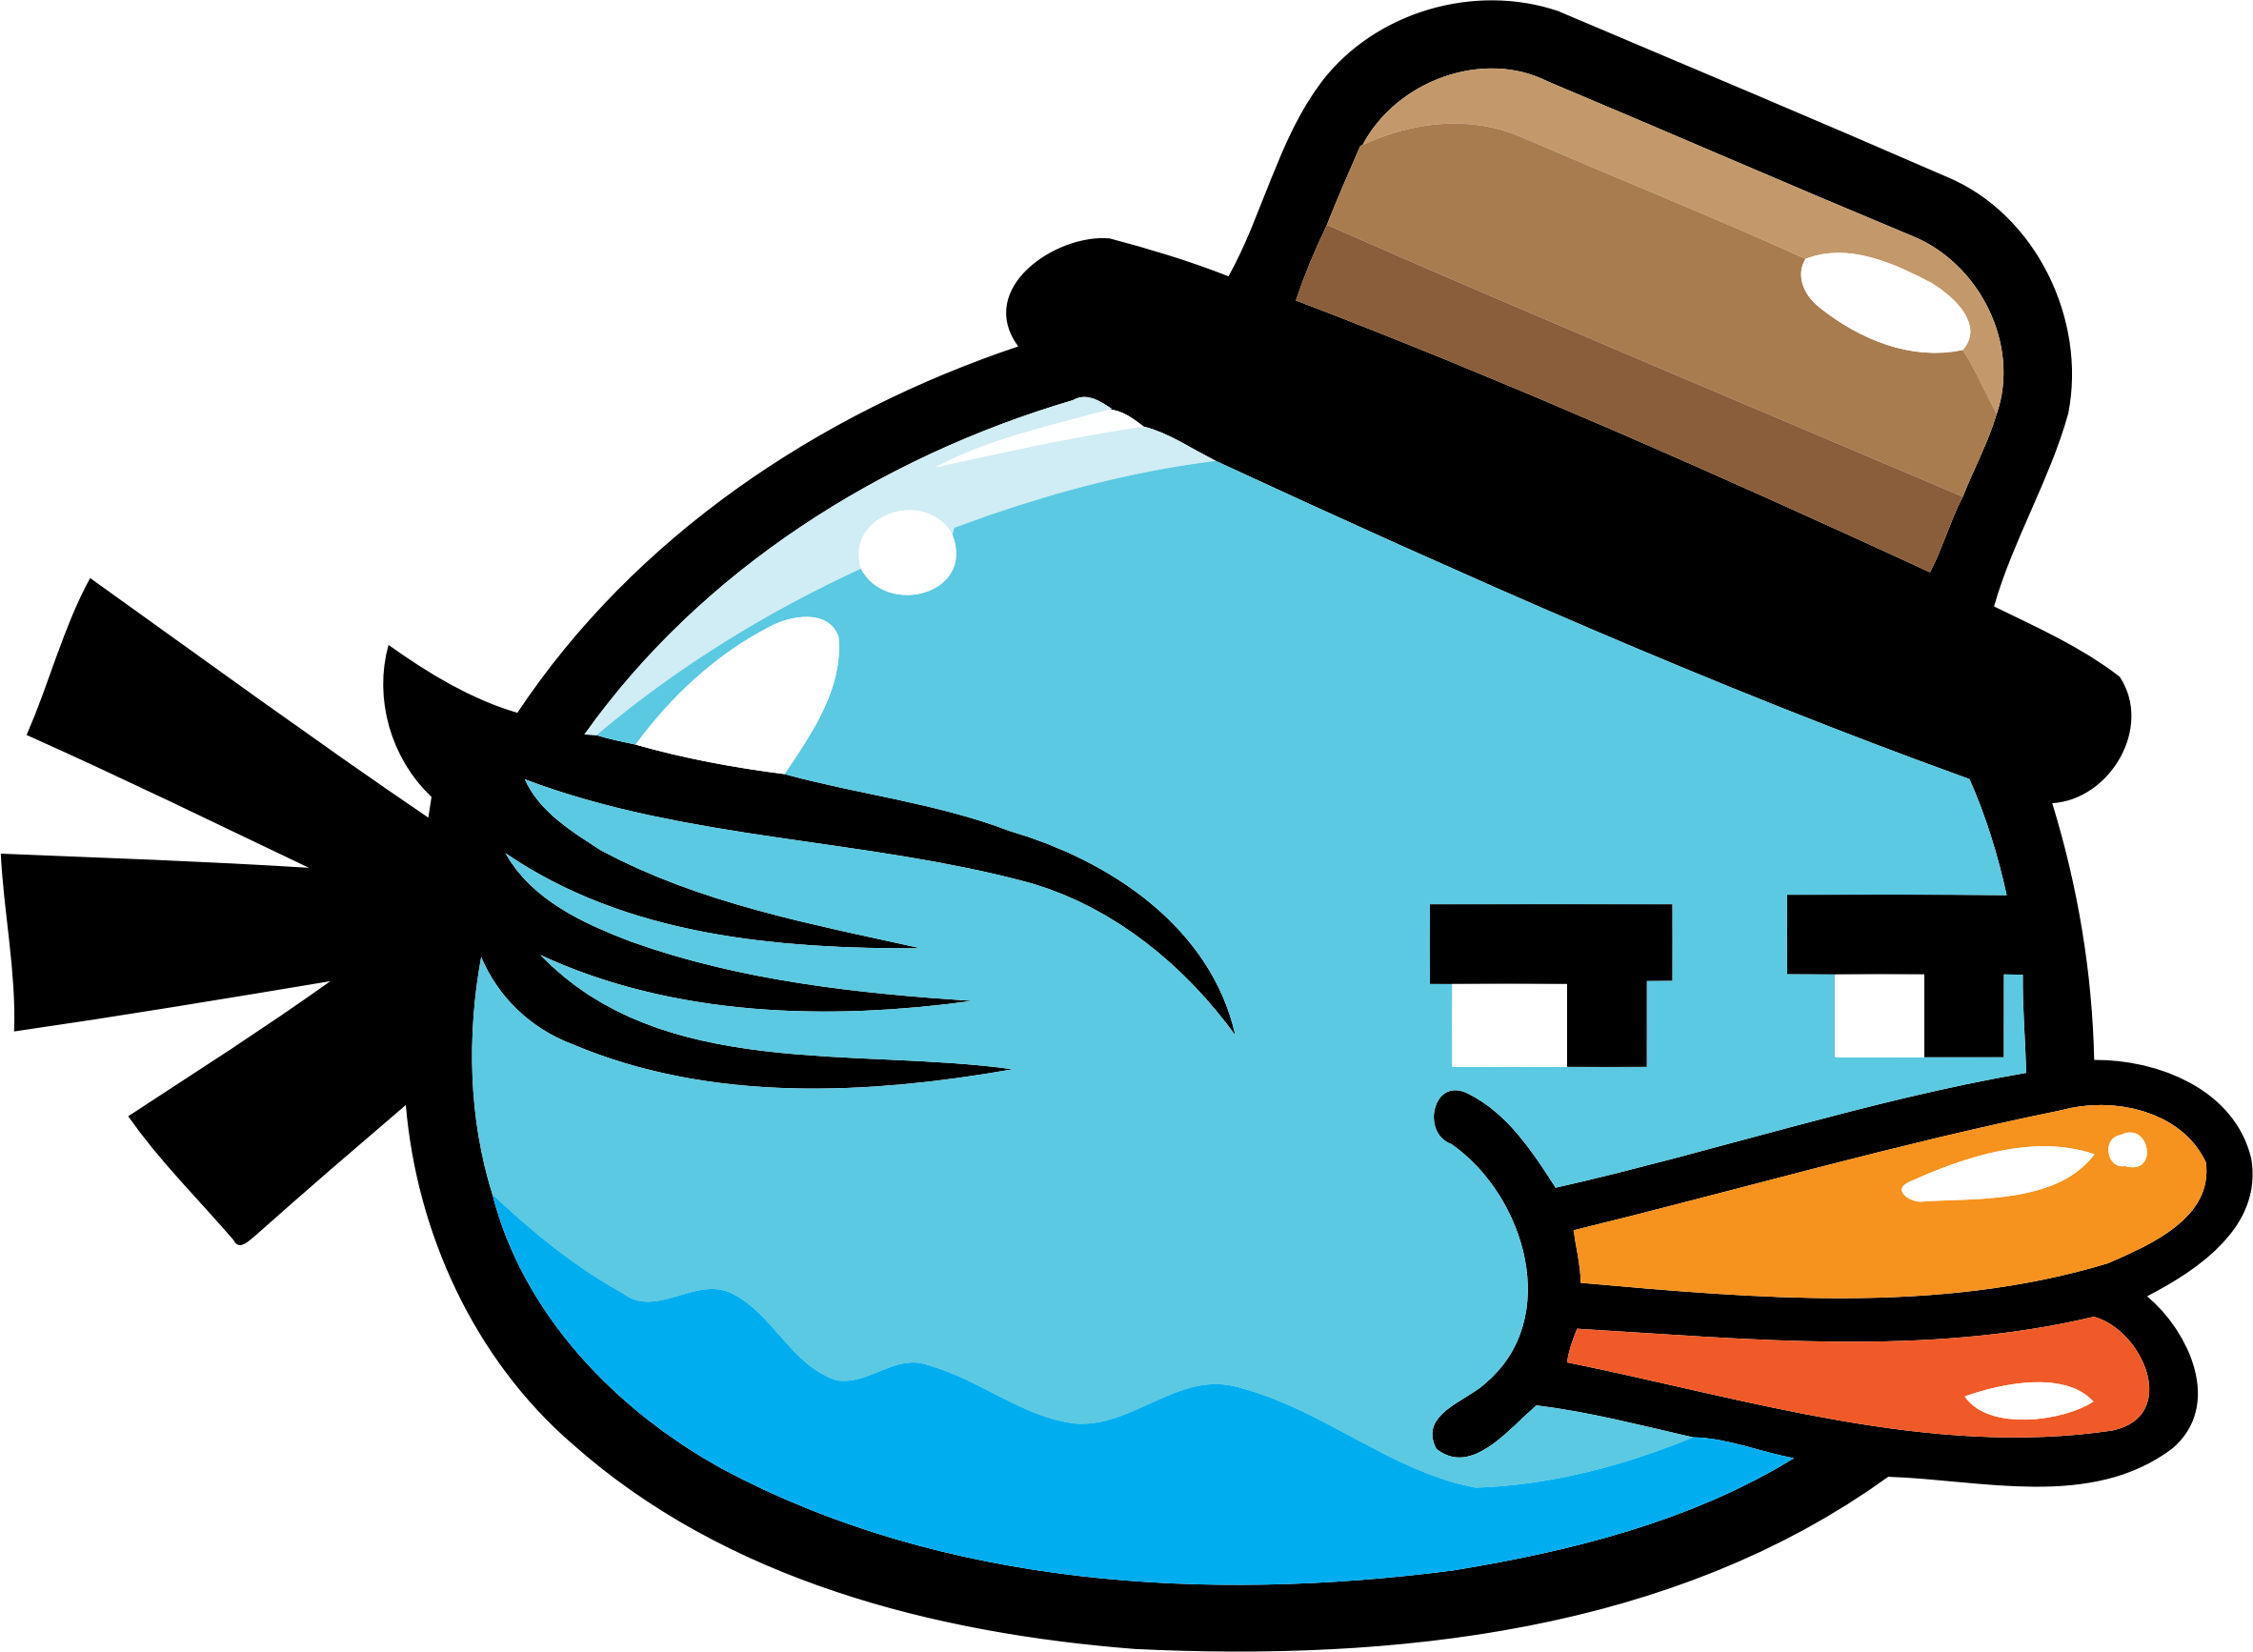 Flying Bird 1 - Flappy Bird Sprite Png (2365x1734)